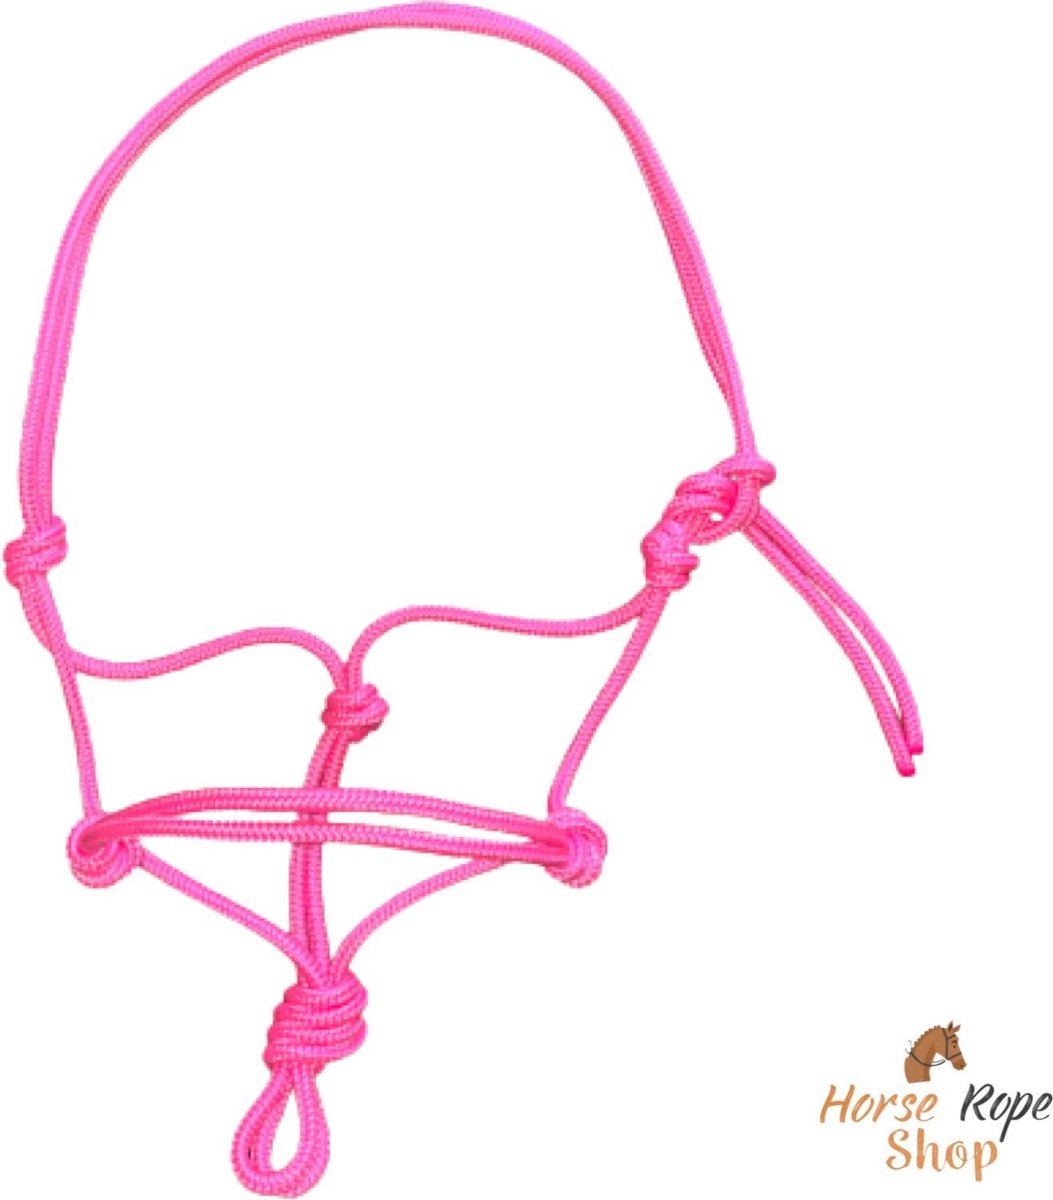 Touwhalster ‘Basic’ roze maat mini-shet | roze, neon roze, basic, touwproducten